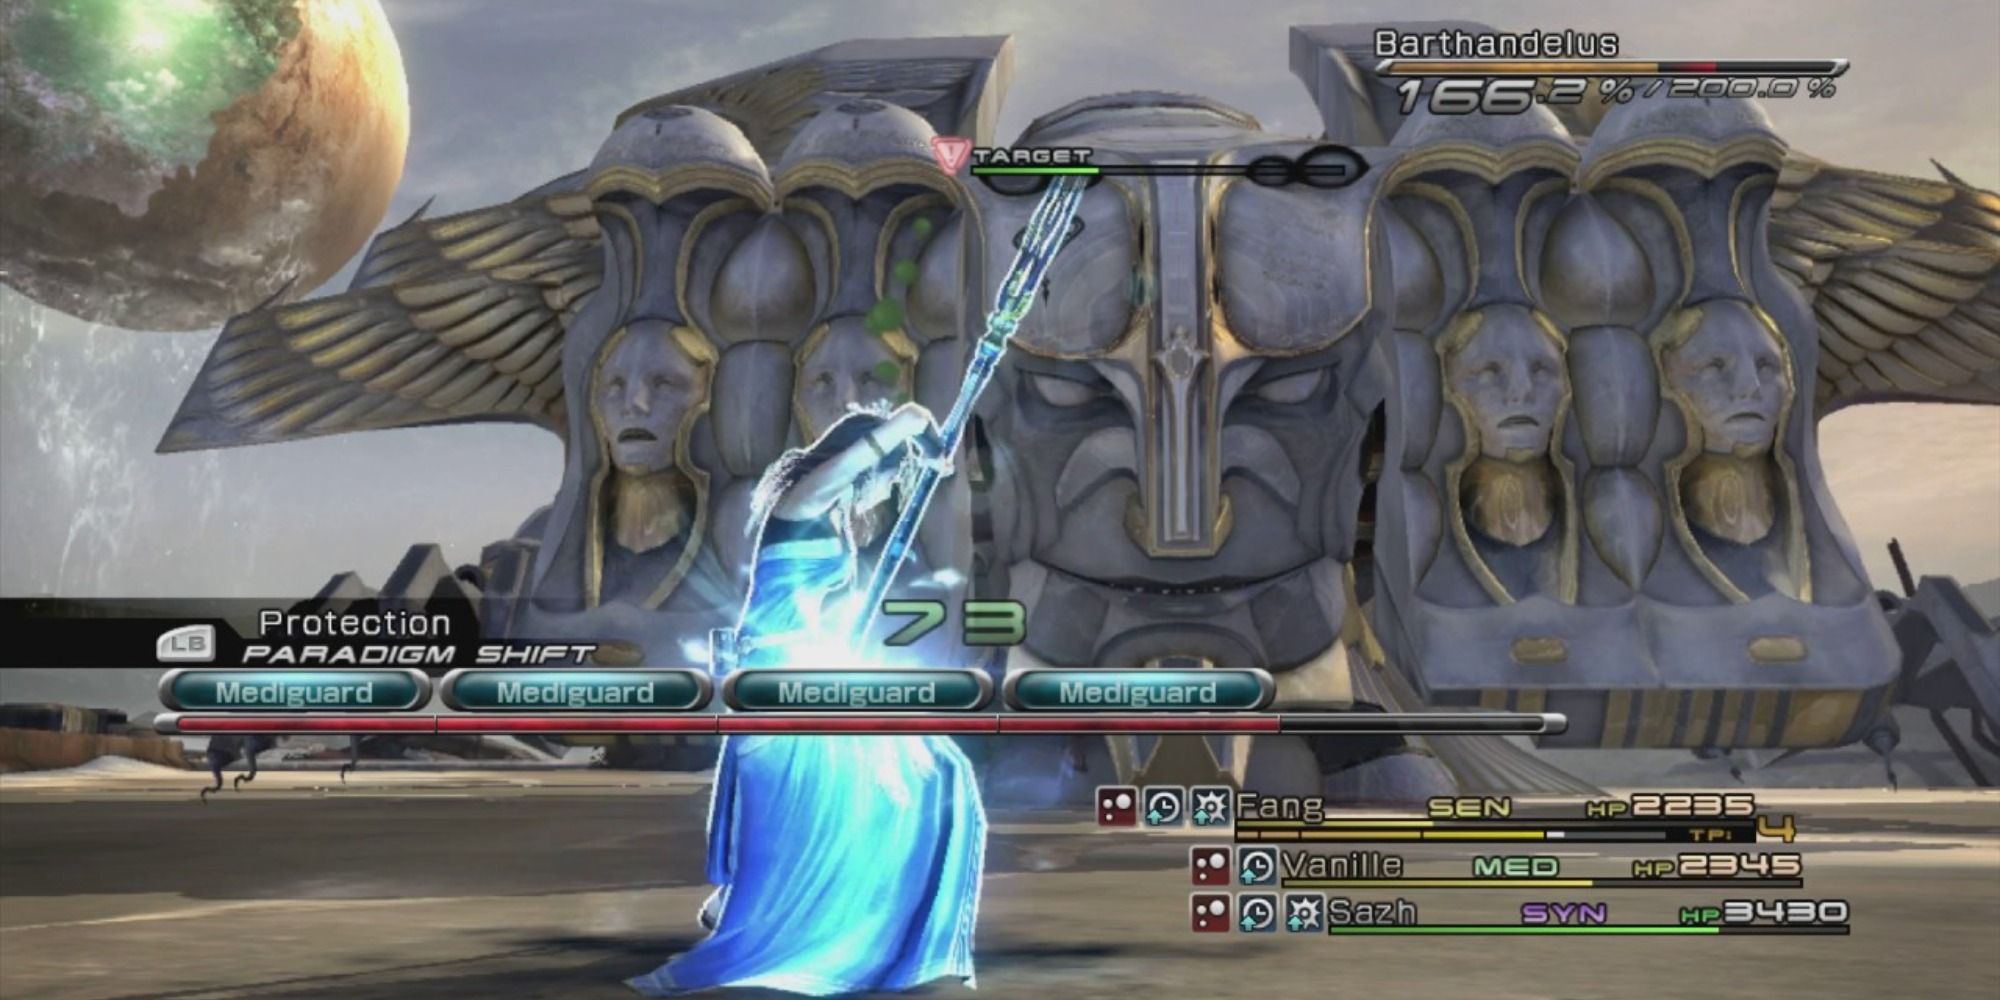 Final Fantasy 13 Barthandelus Fight